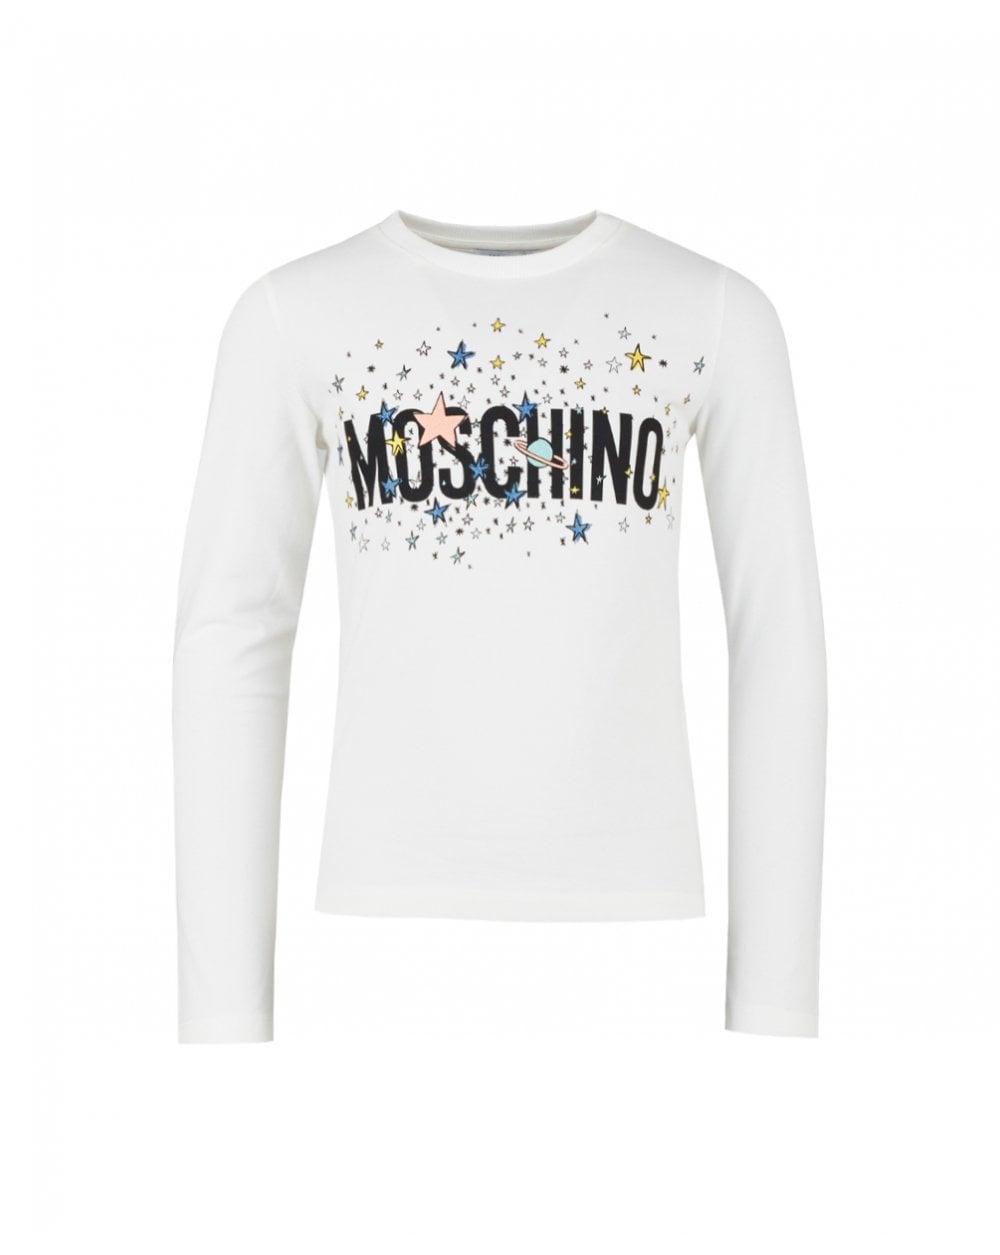 Star Shirt Company Logo - Moschino Star Logo Long Sleeved T-shirt - Junior from Psyche UK